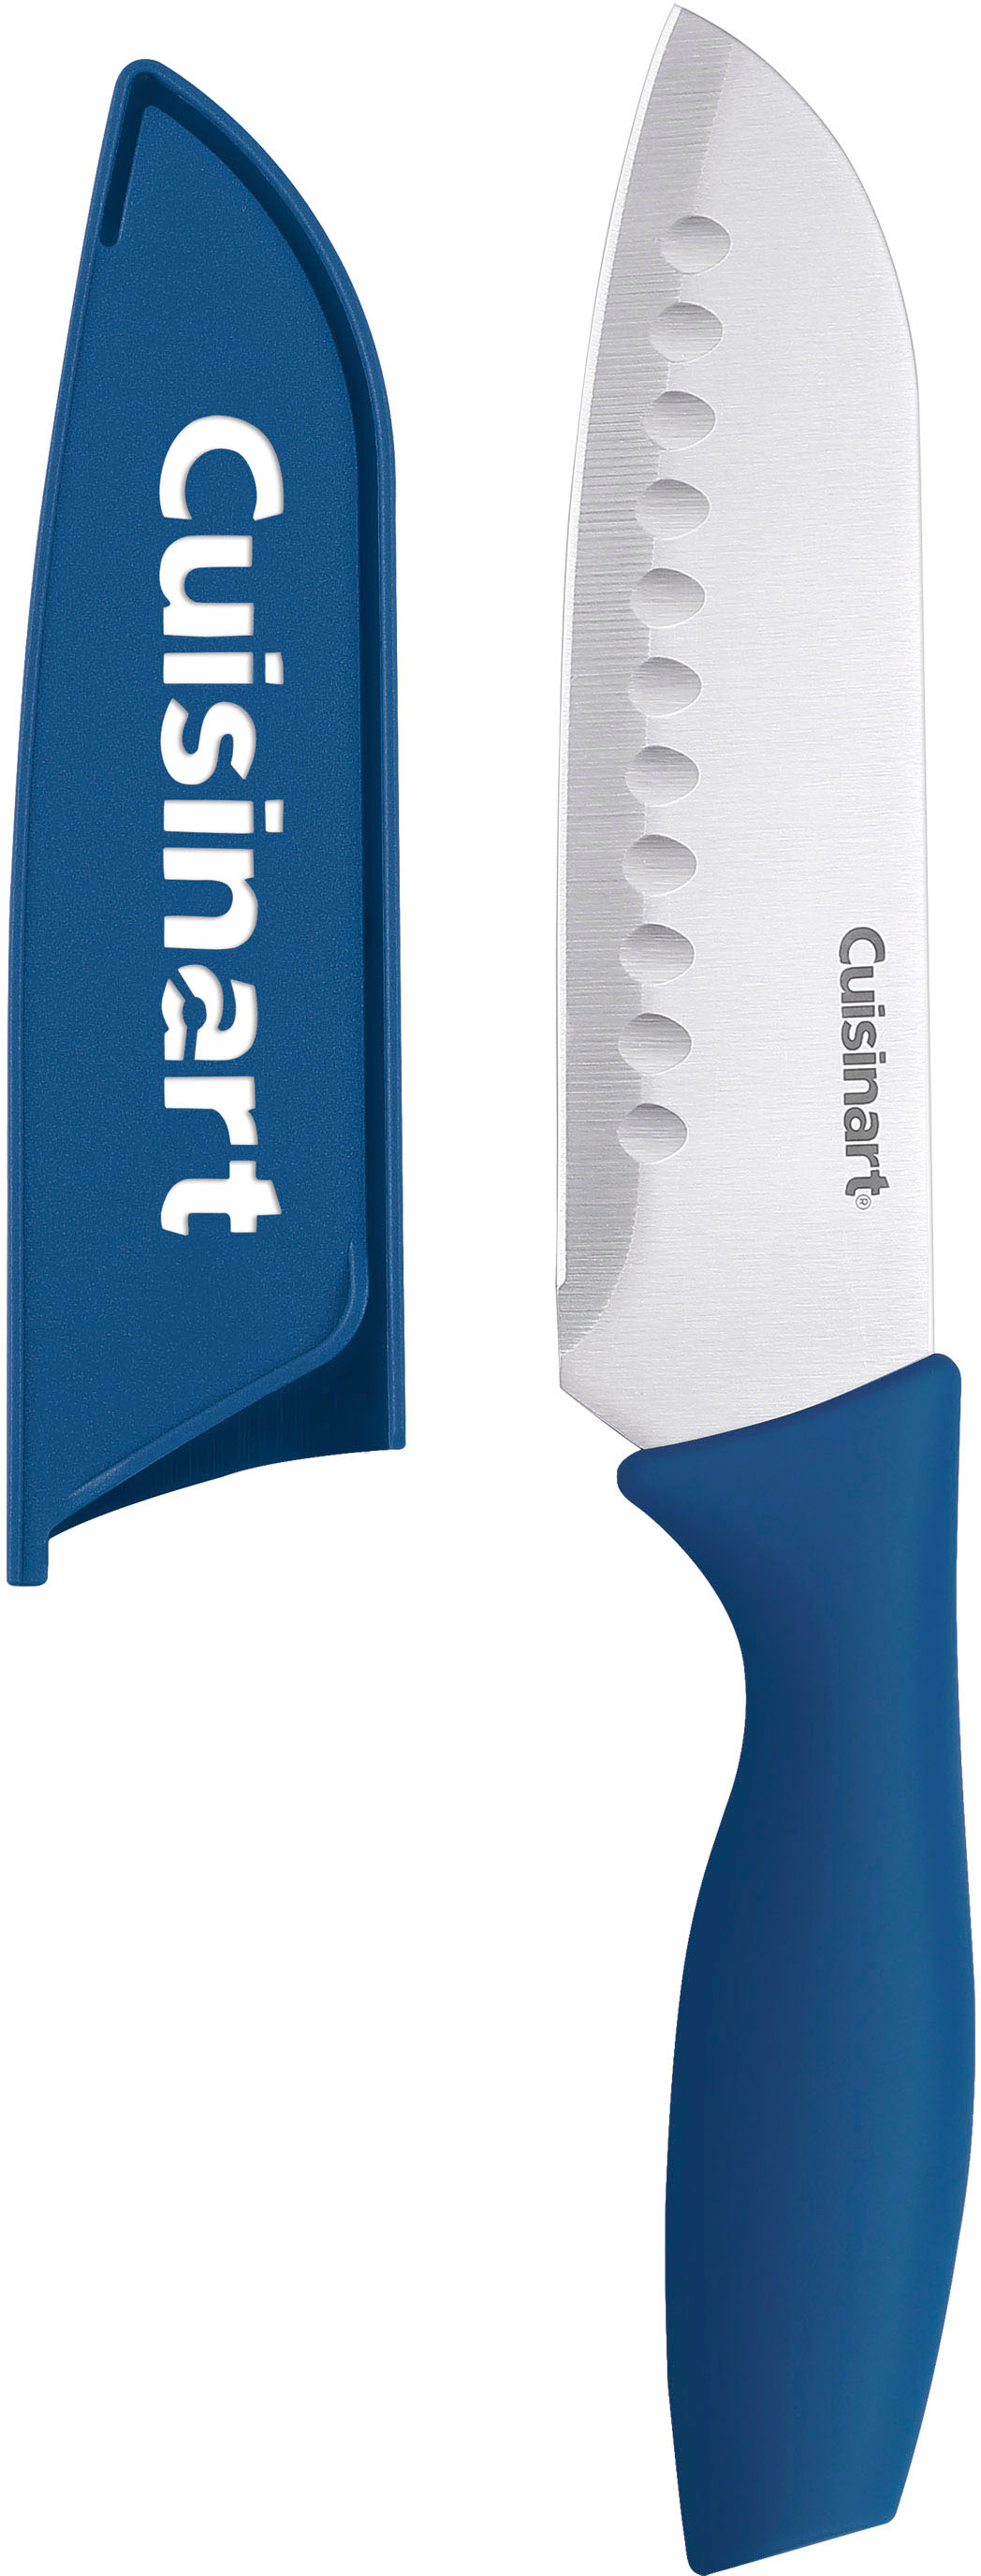 Cuisinart Advantage 10 Piece Ceramic Coated Knife Set w/ Blade Guards